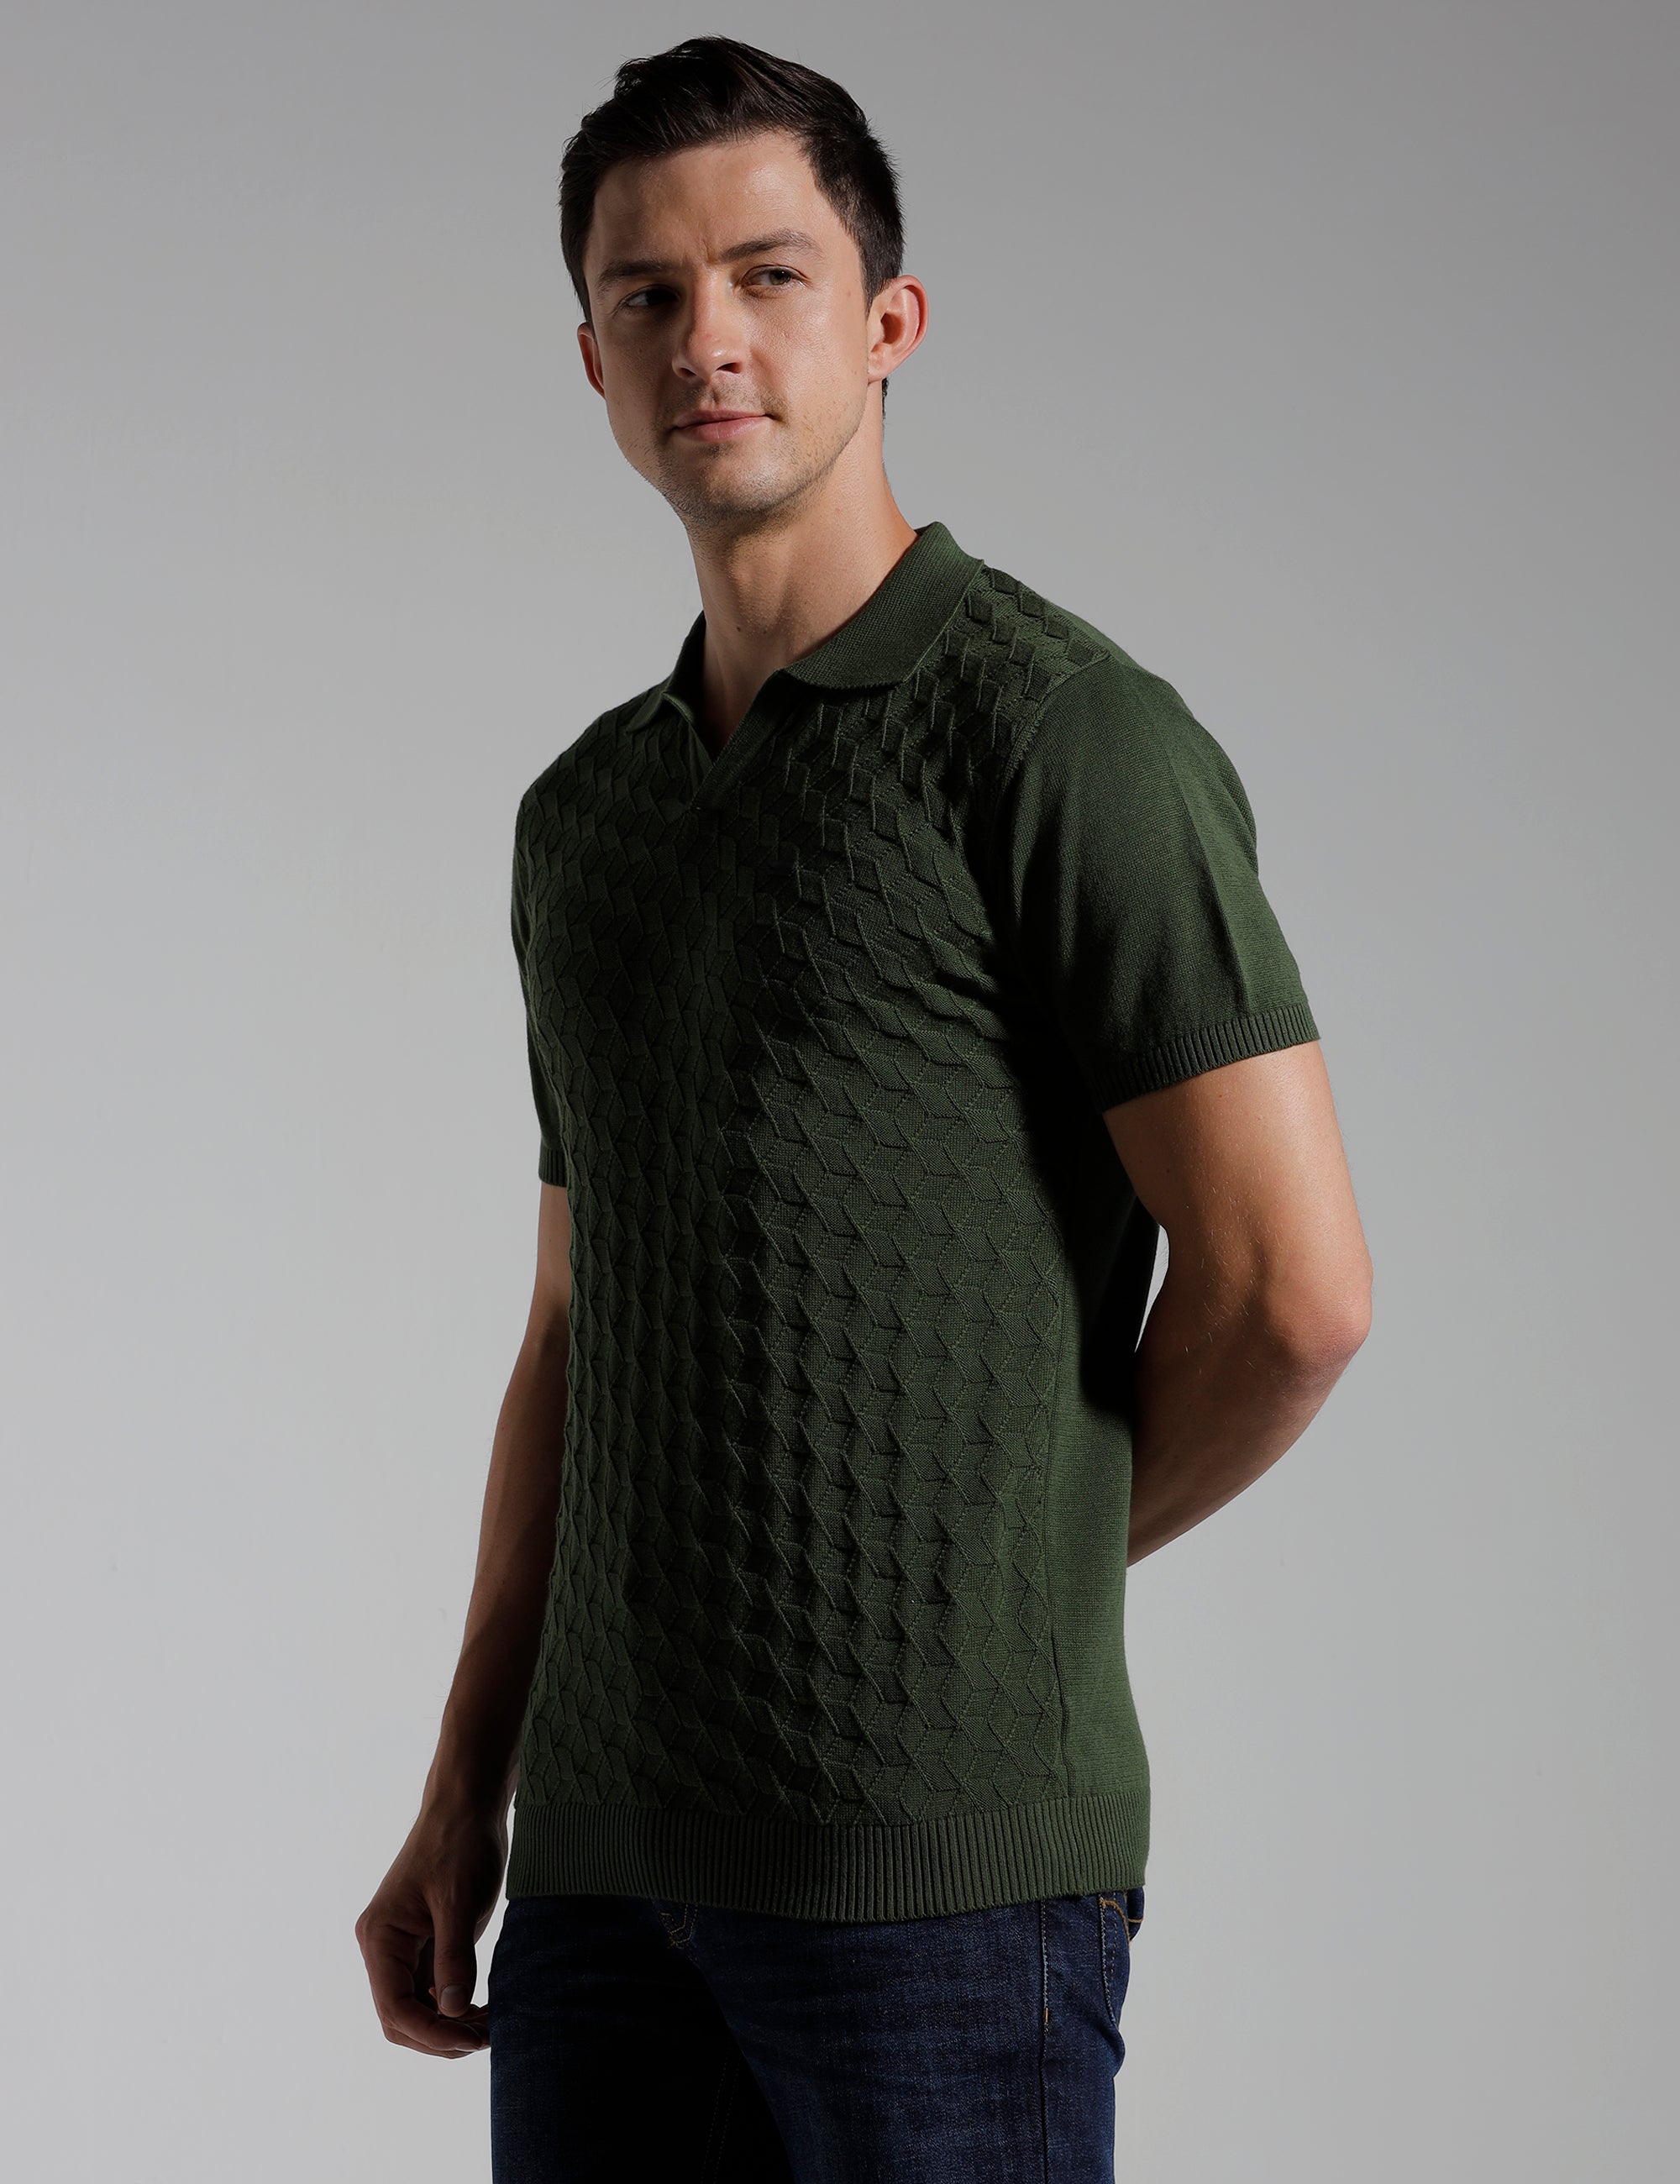 Identiti Half Sleeve Jacquard Slim Fit Cotton Casual Polo T-Shirt For Men